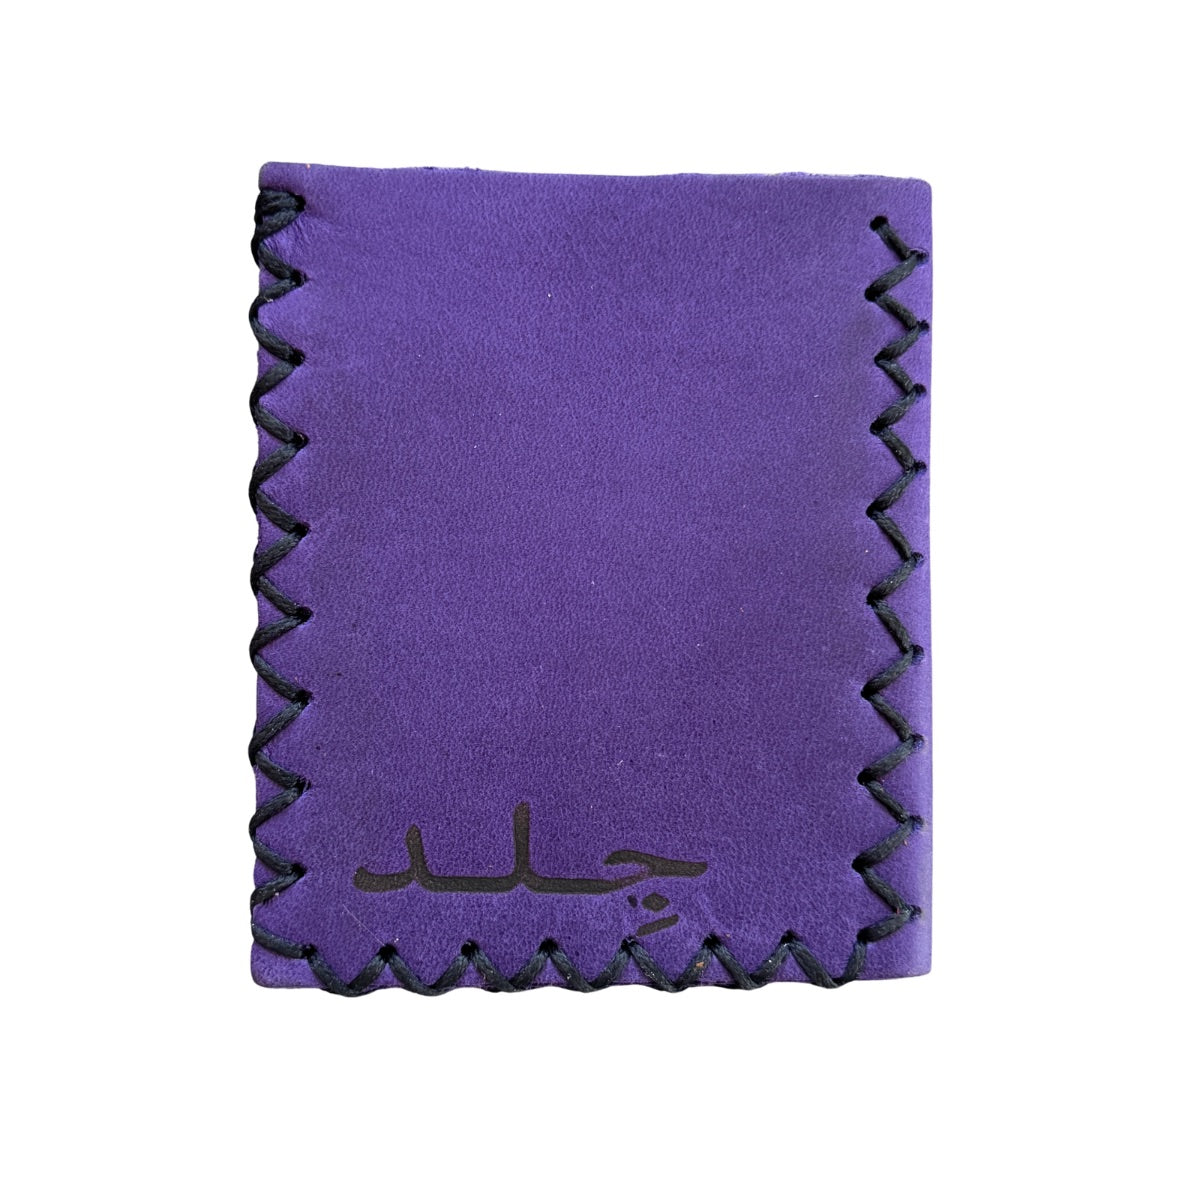 Leather Wallet/Card Holder